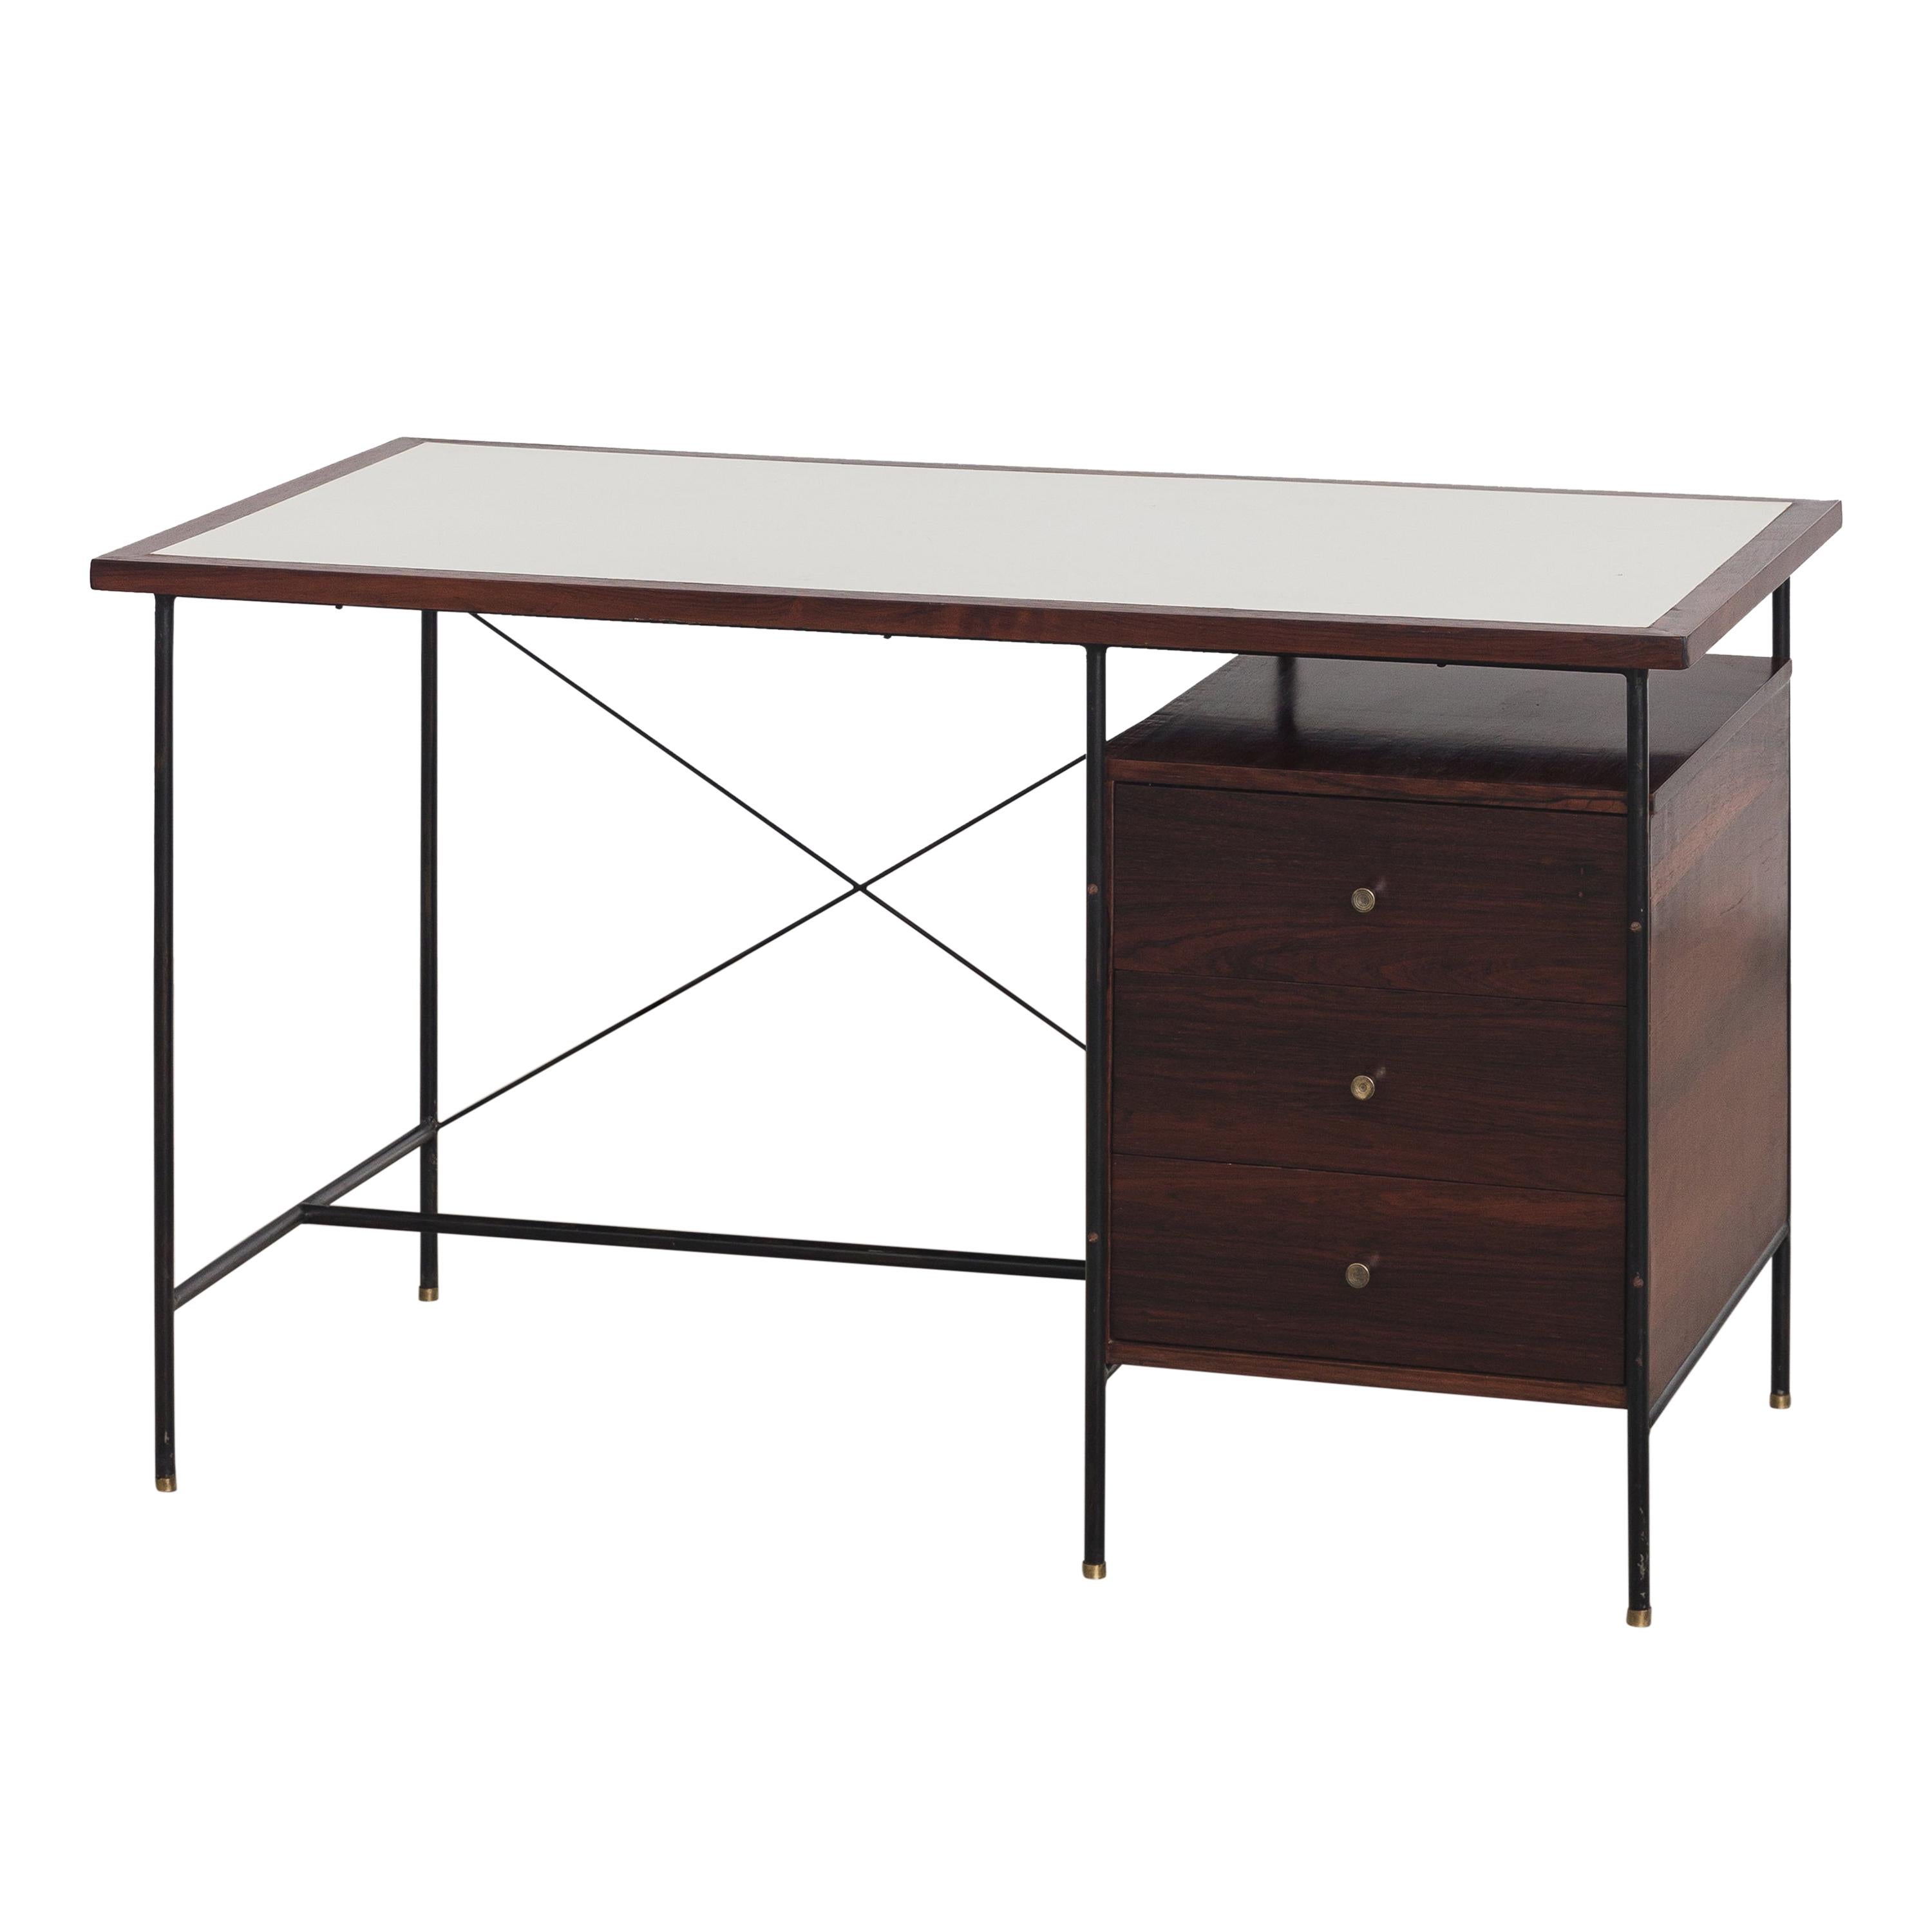 Rosewood Desk by Geraldo de Barros 1950s, Brazilian Midcentury Design For Sale